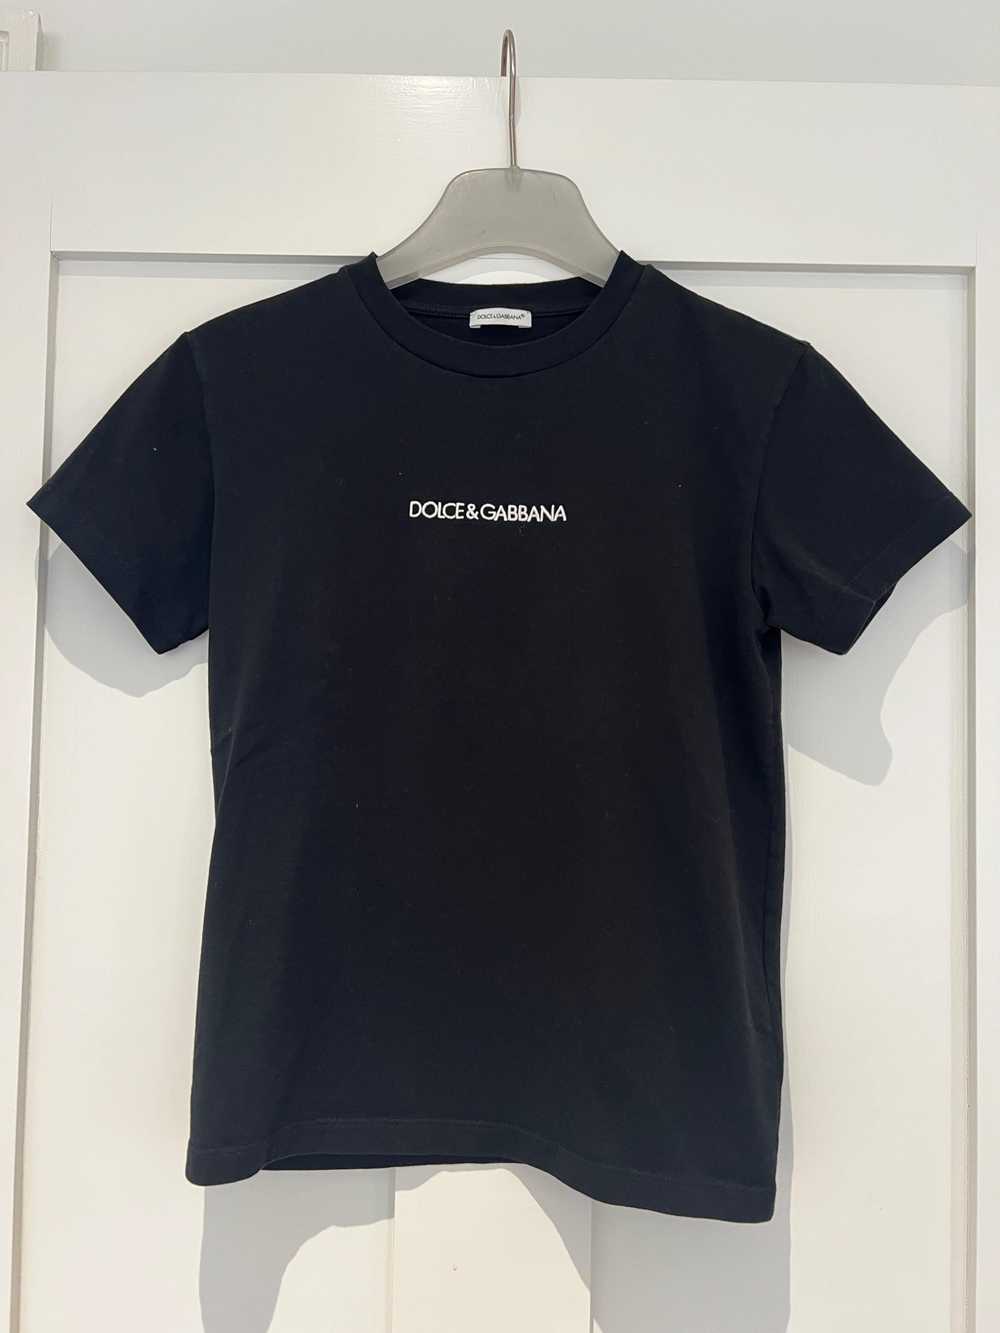 Product Details Dolce & Gabbana Kids Black T-Shirt - image 2